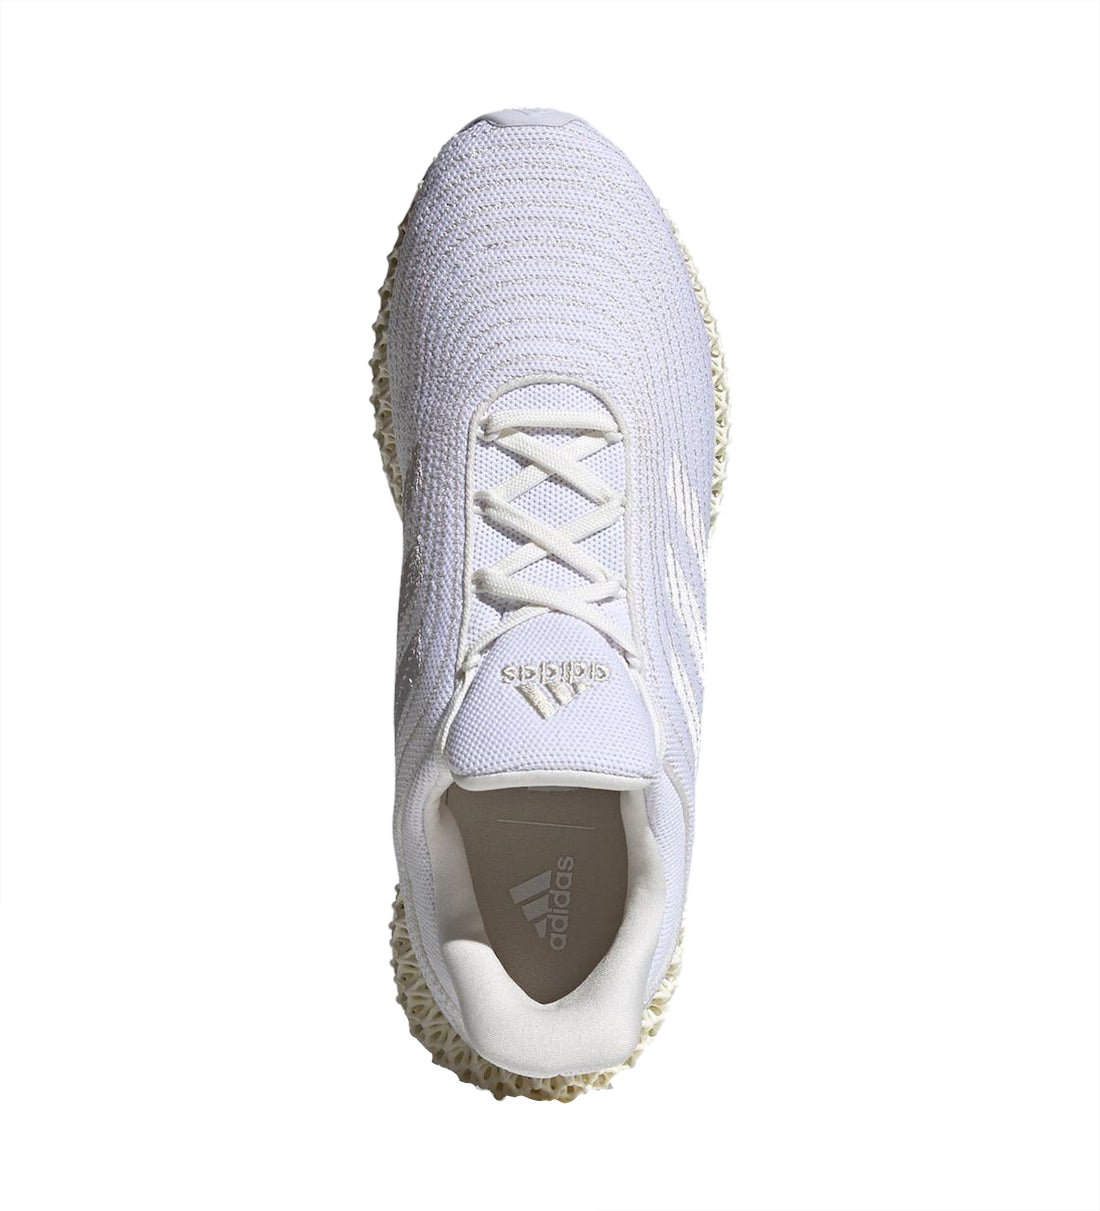 Parley x adidas Ultra 4D Cream White - May. 2021 - FZ0596